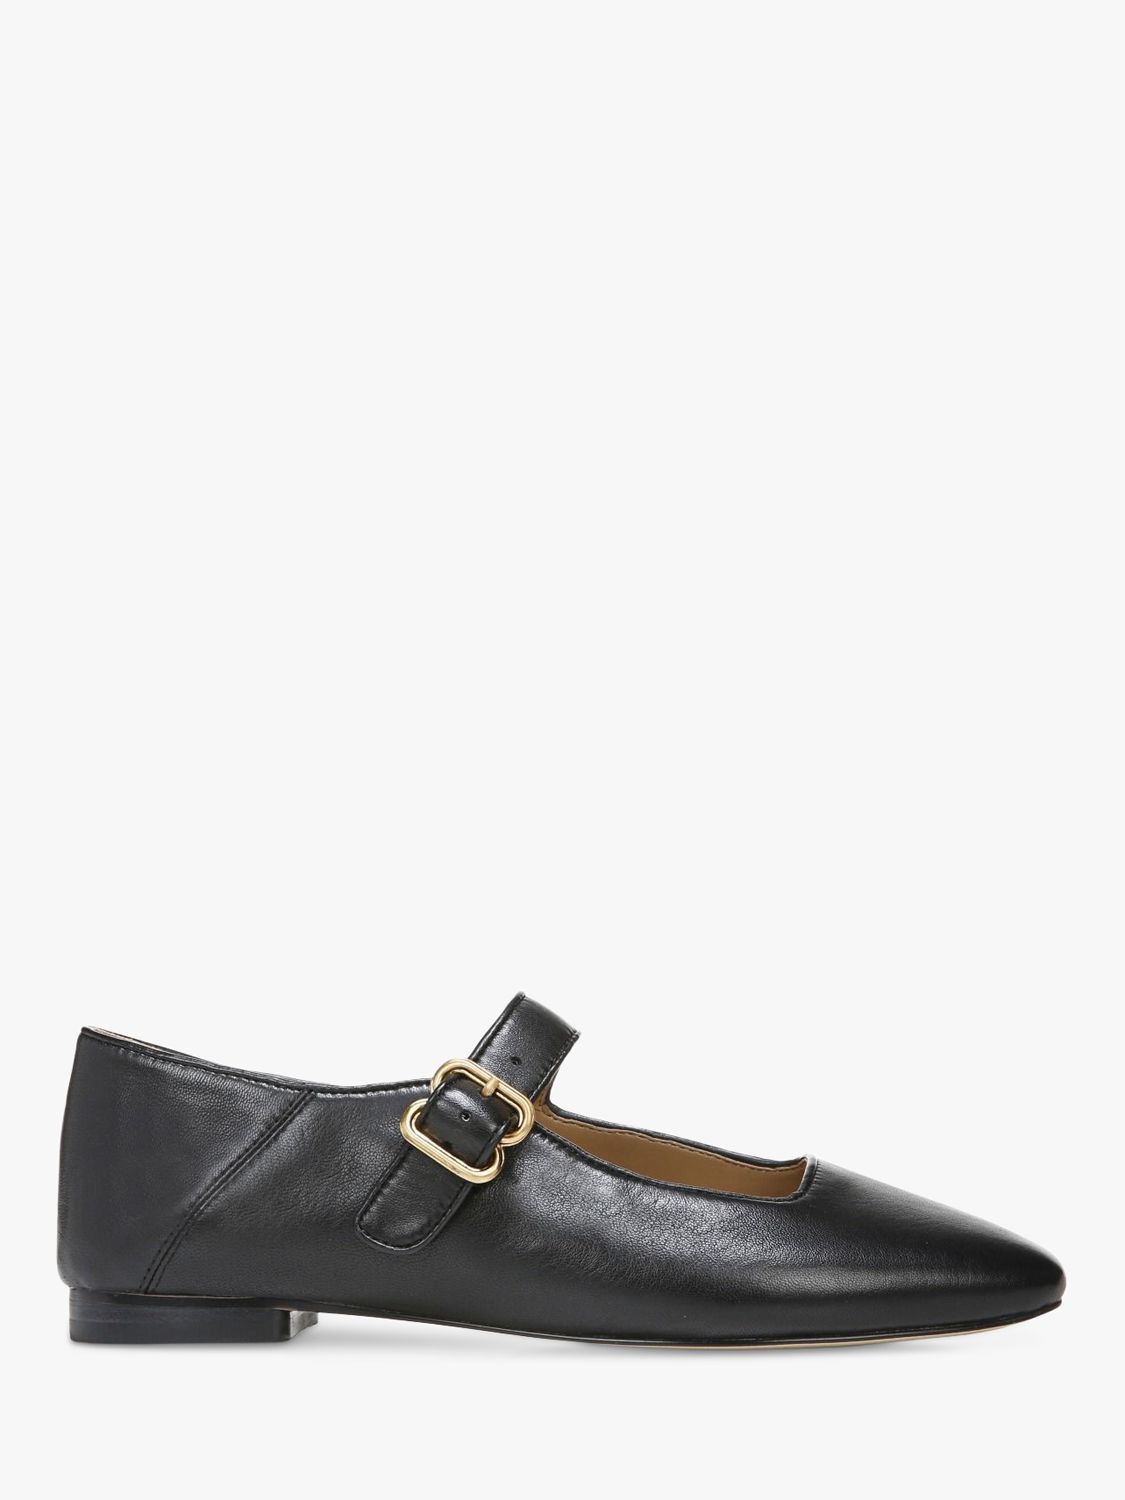 Sam Edelman Michaela Mary Jane Shoes, Black at John Lewis & Partners